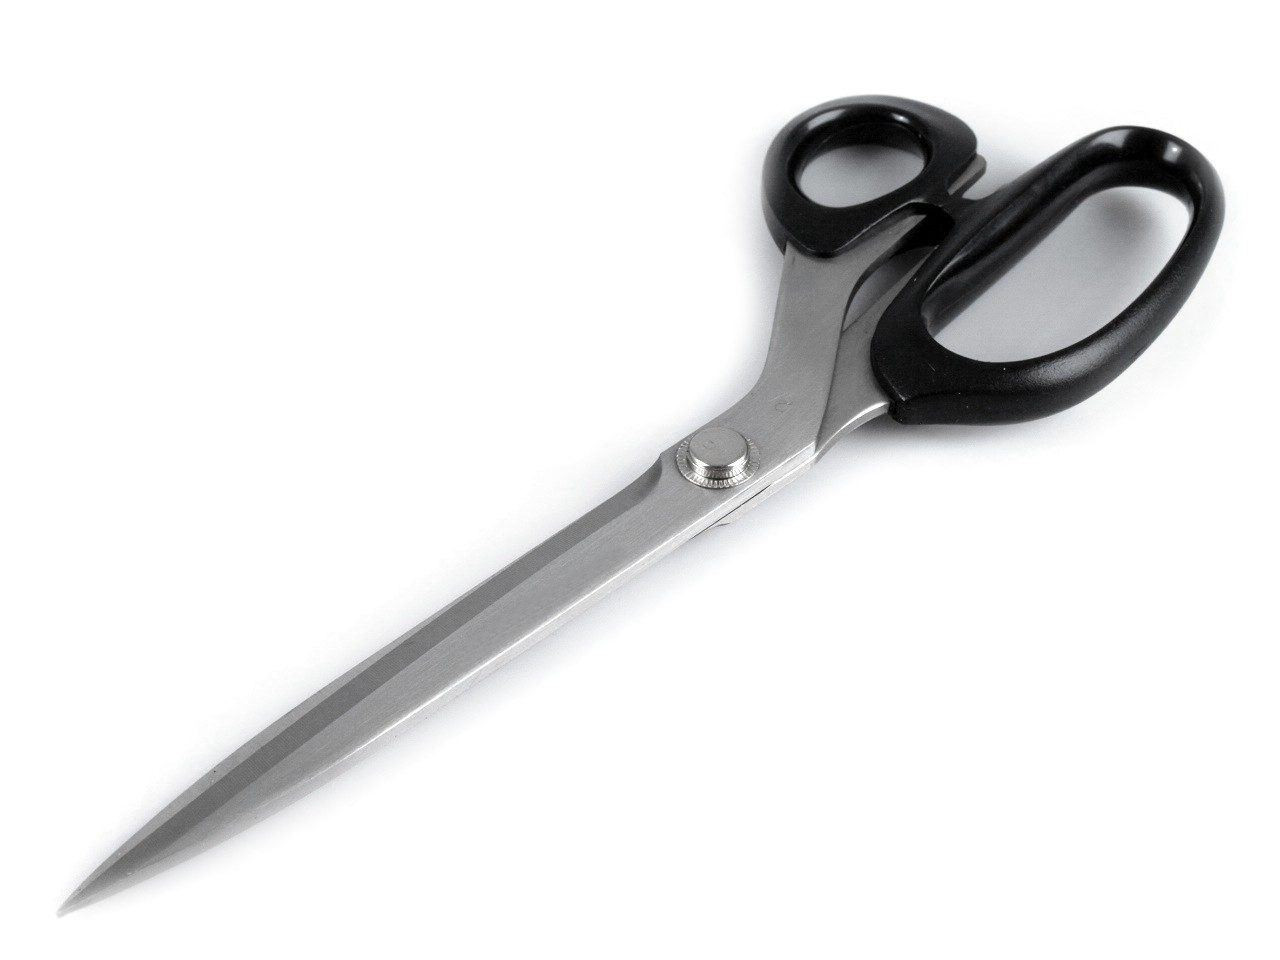 Tailor scissors length 24cm